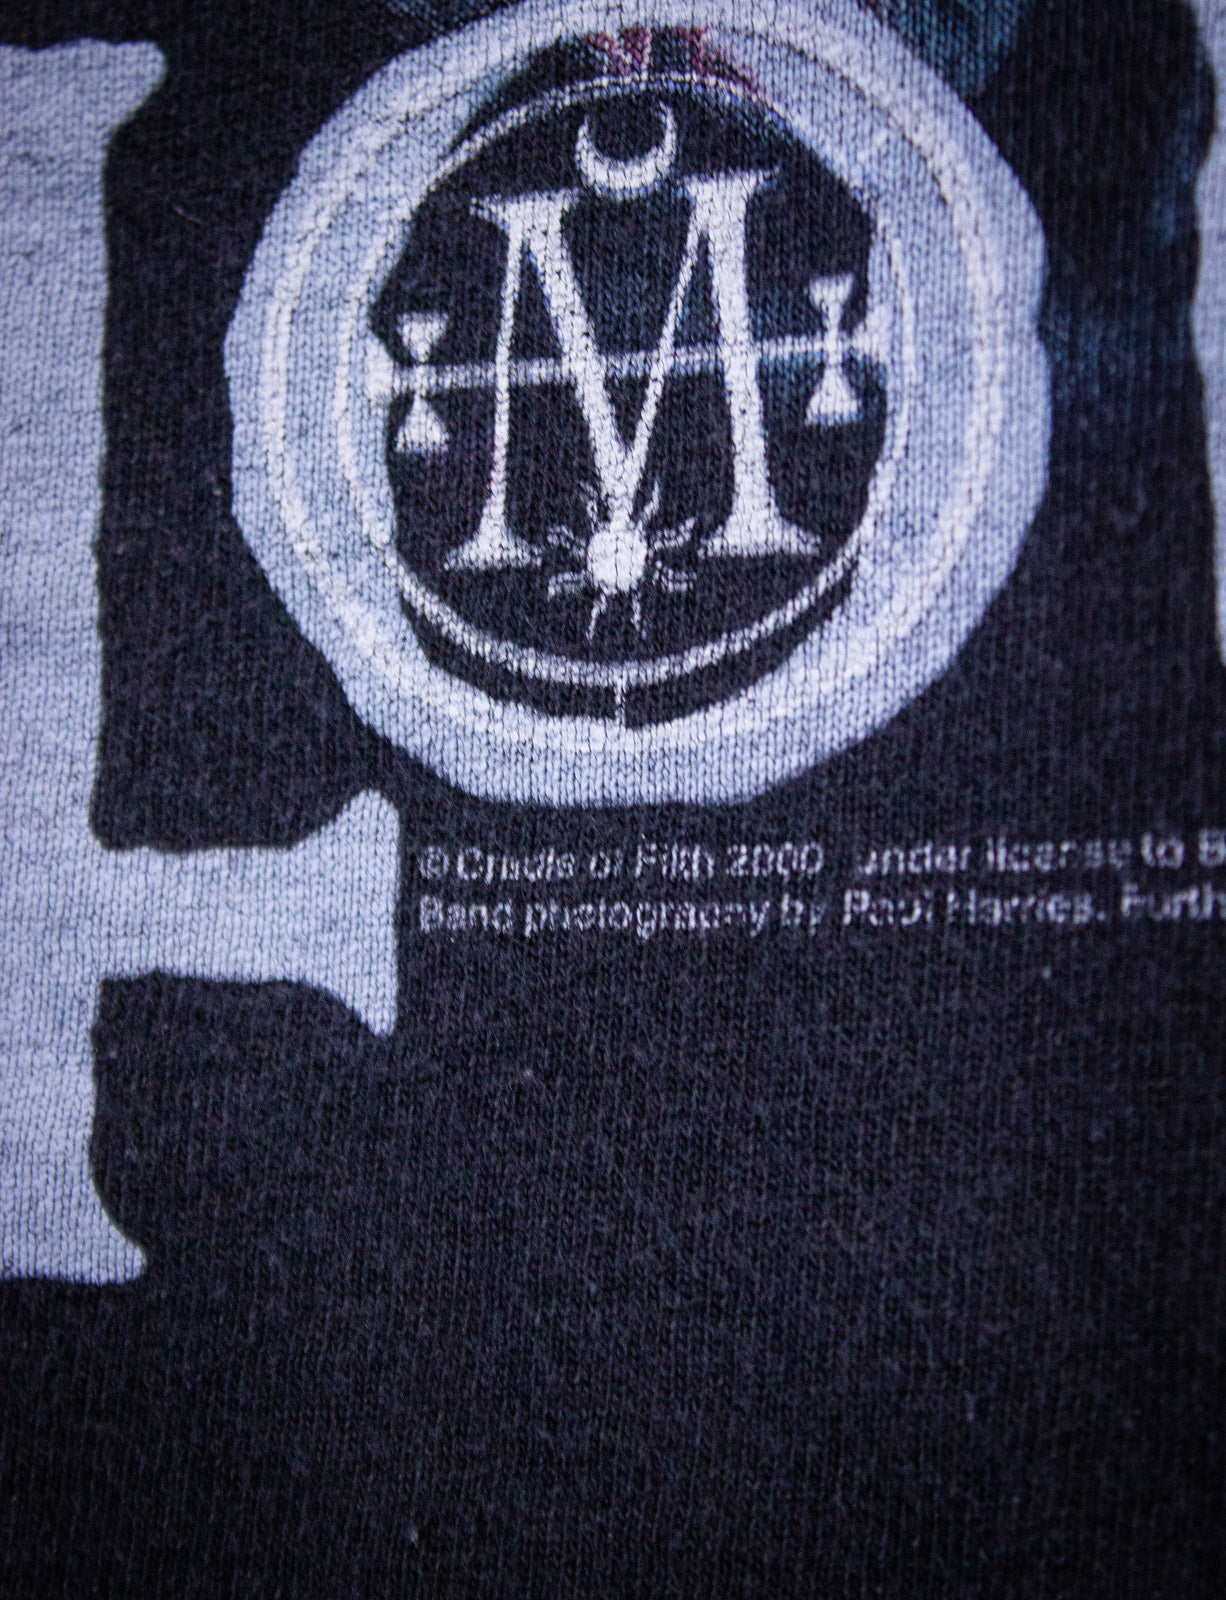 Vintage Cradle of Filth Pagan Saviour Long Sleeve Concert T Shirt 2000 Black Large